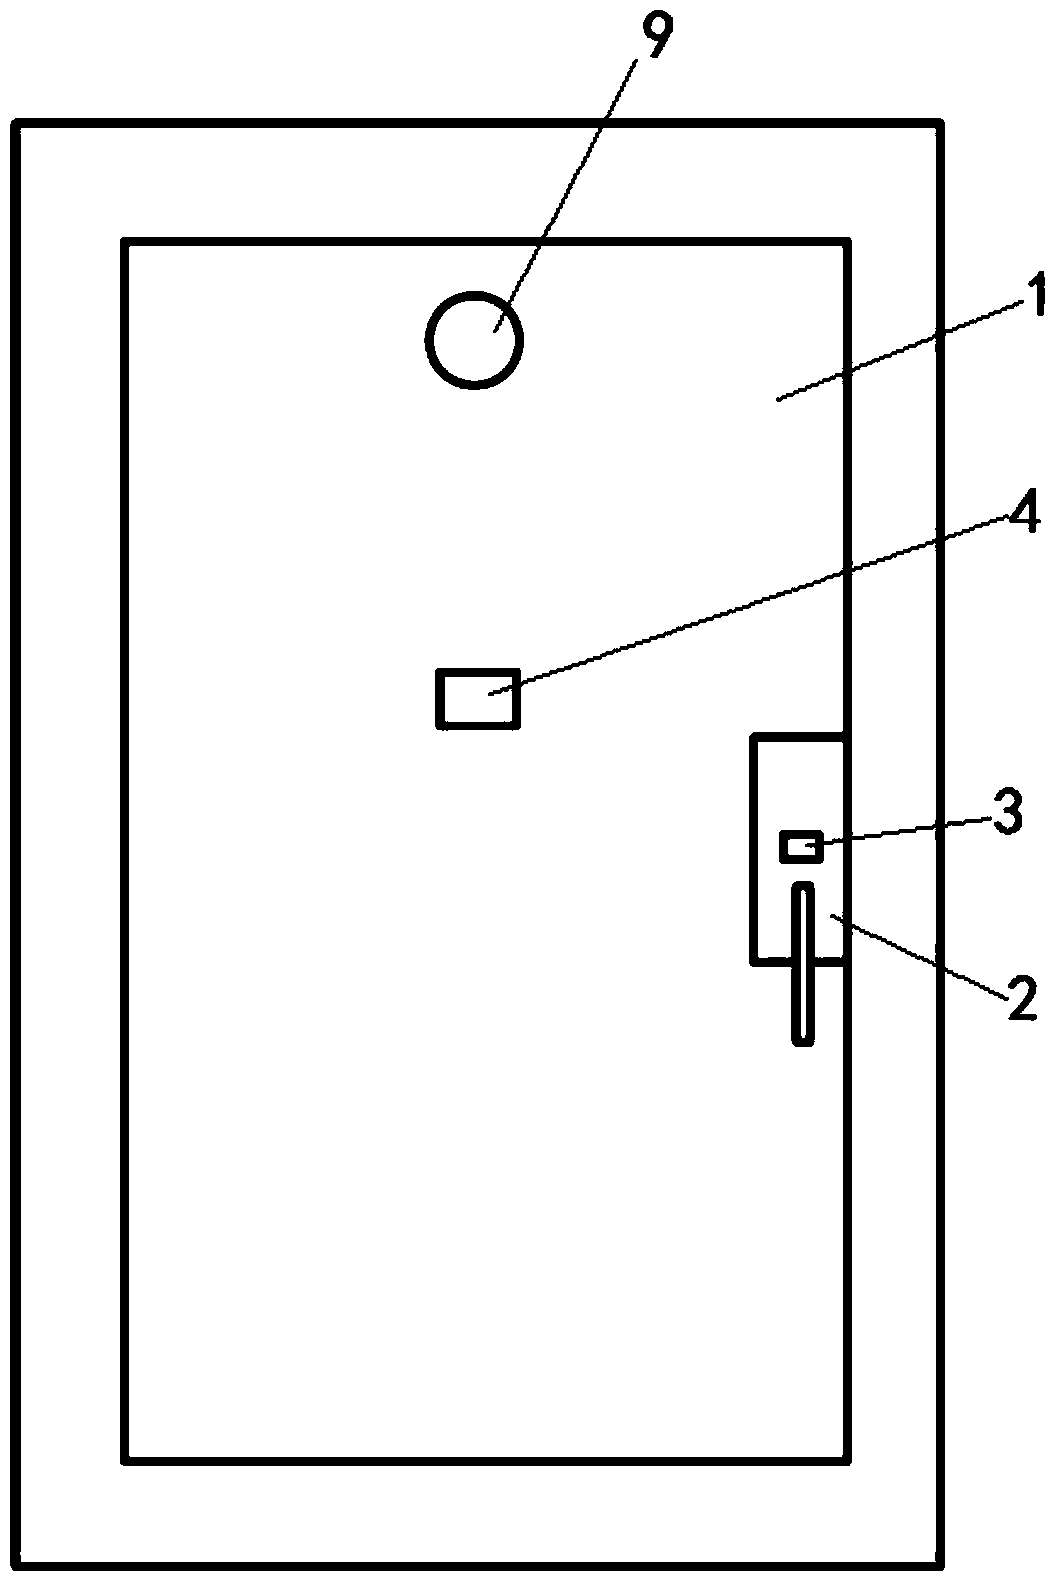 Using method of acoustic anti-theft door